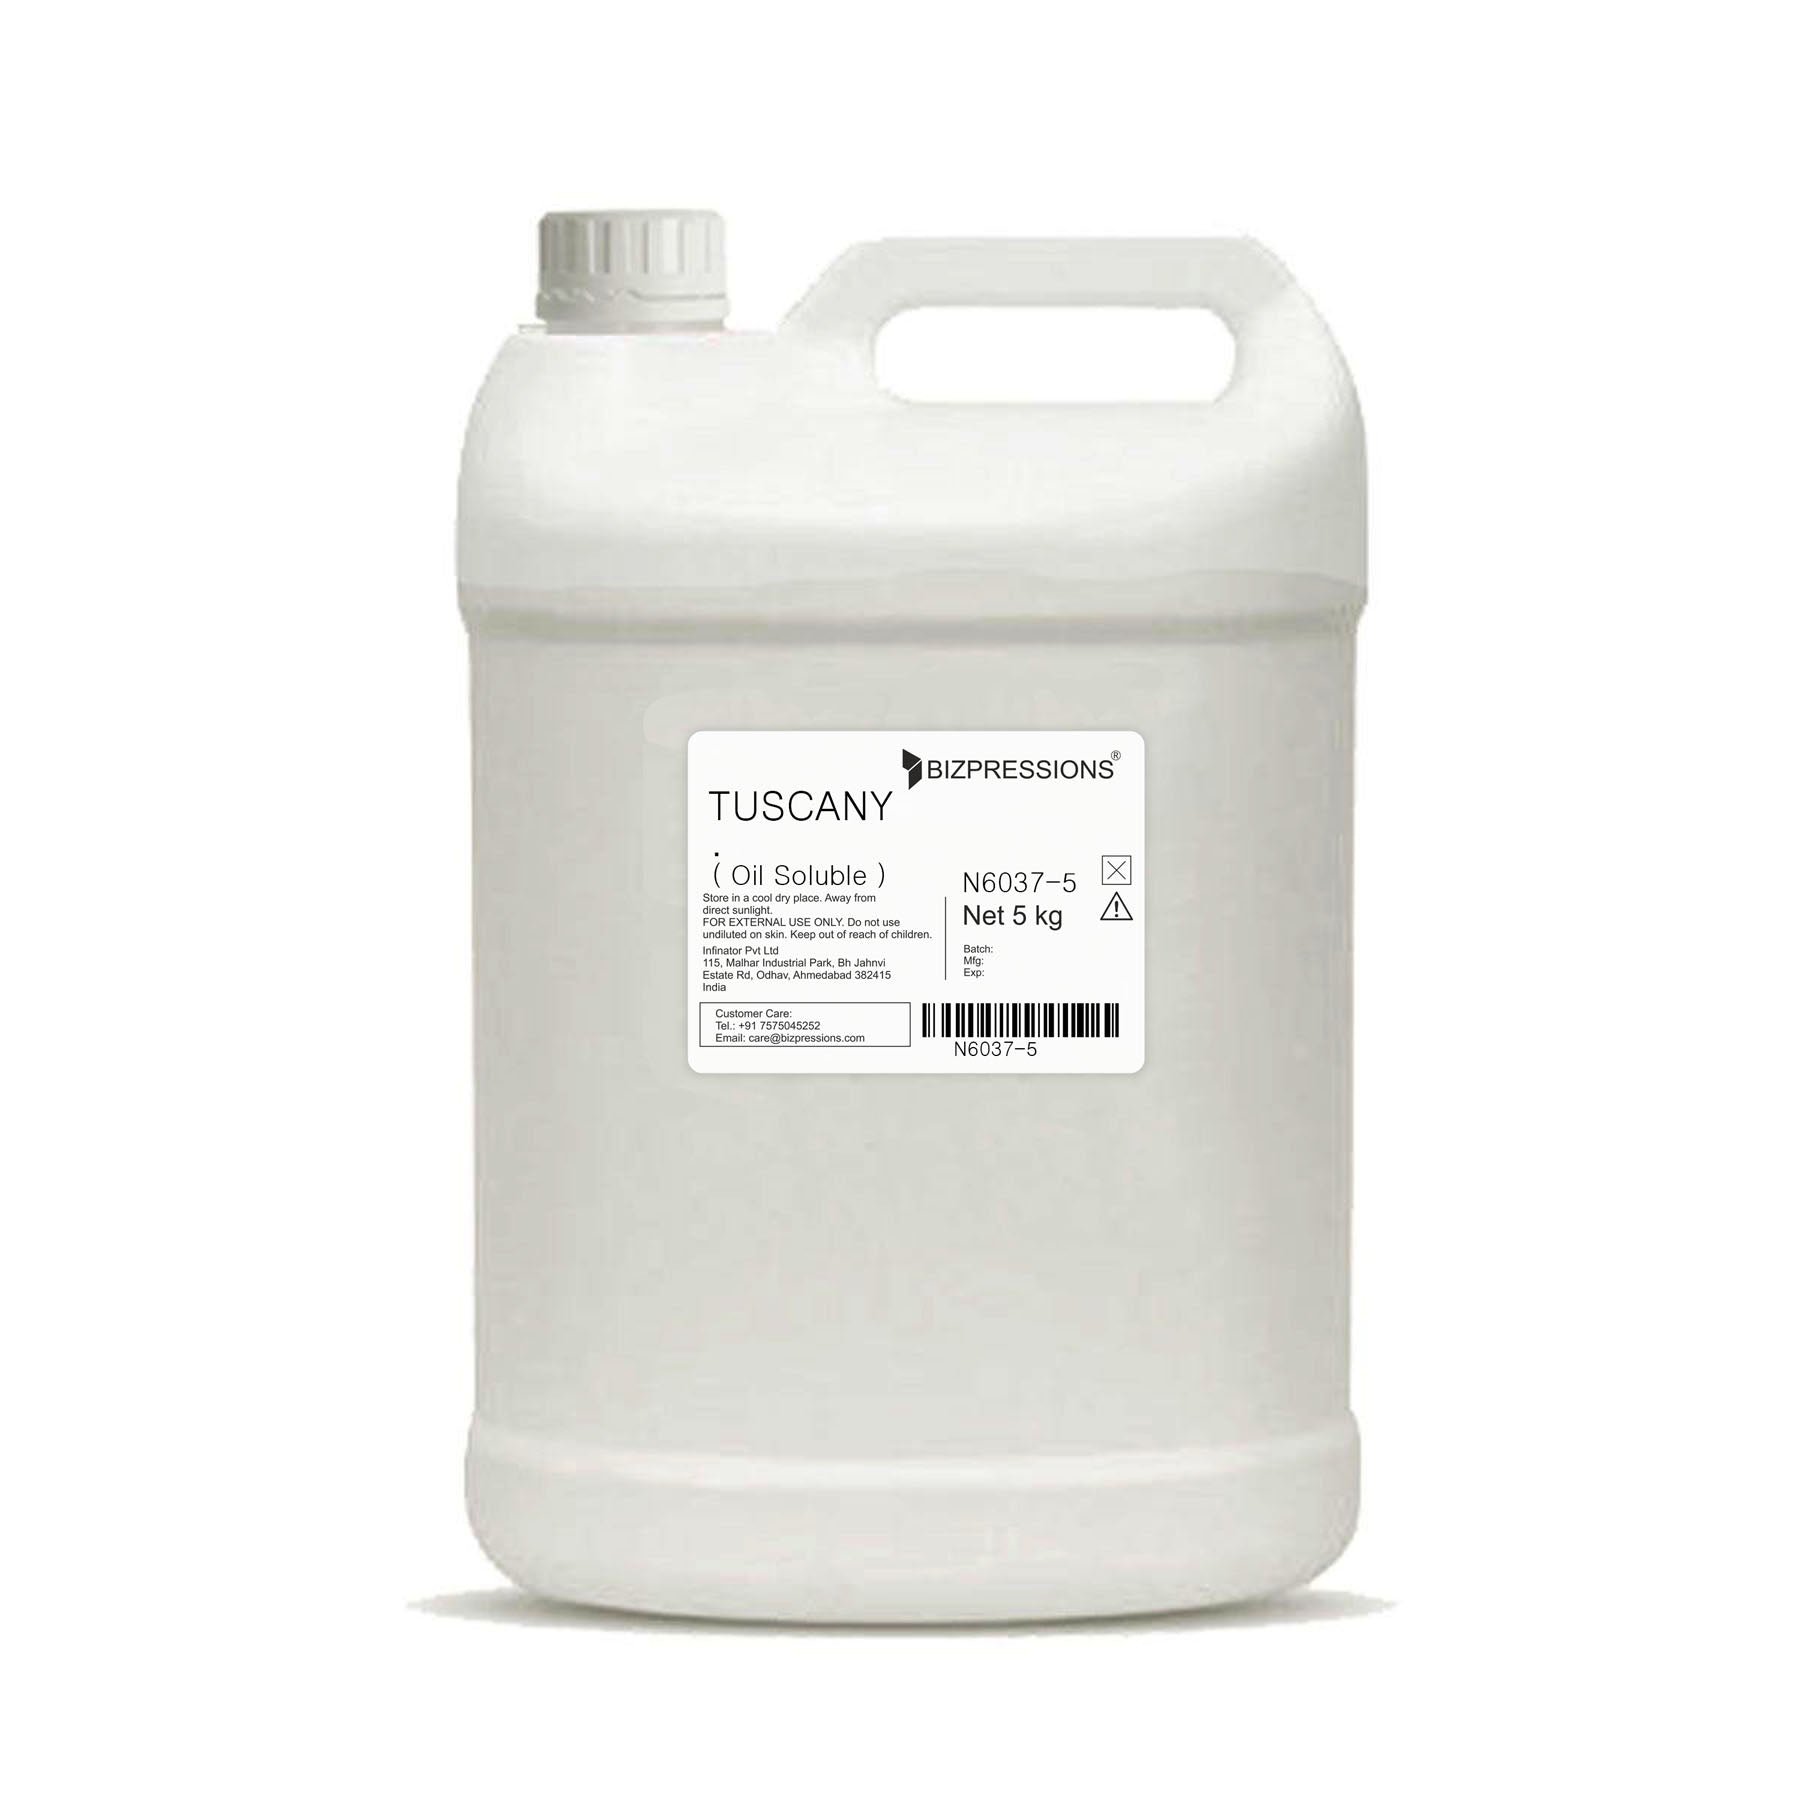 TUSCANY - Fragrance ( Oil Soluble ) - 5 kg